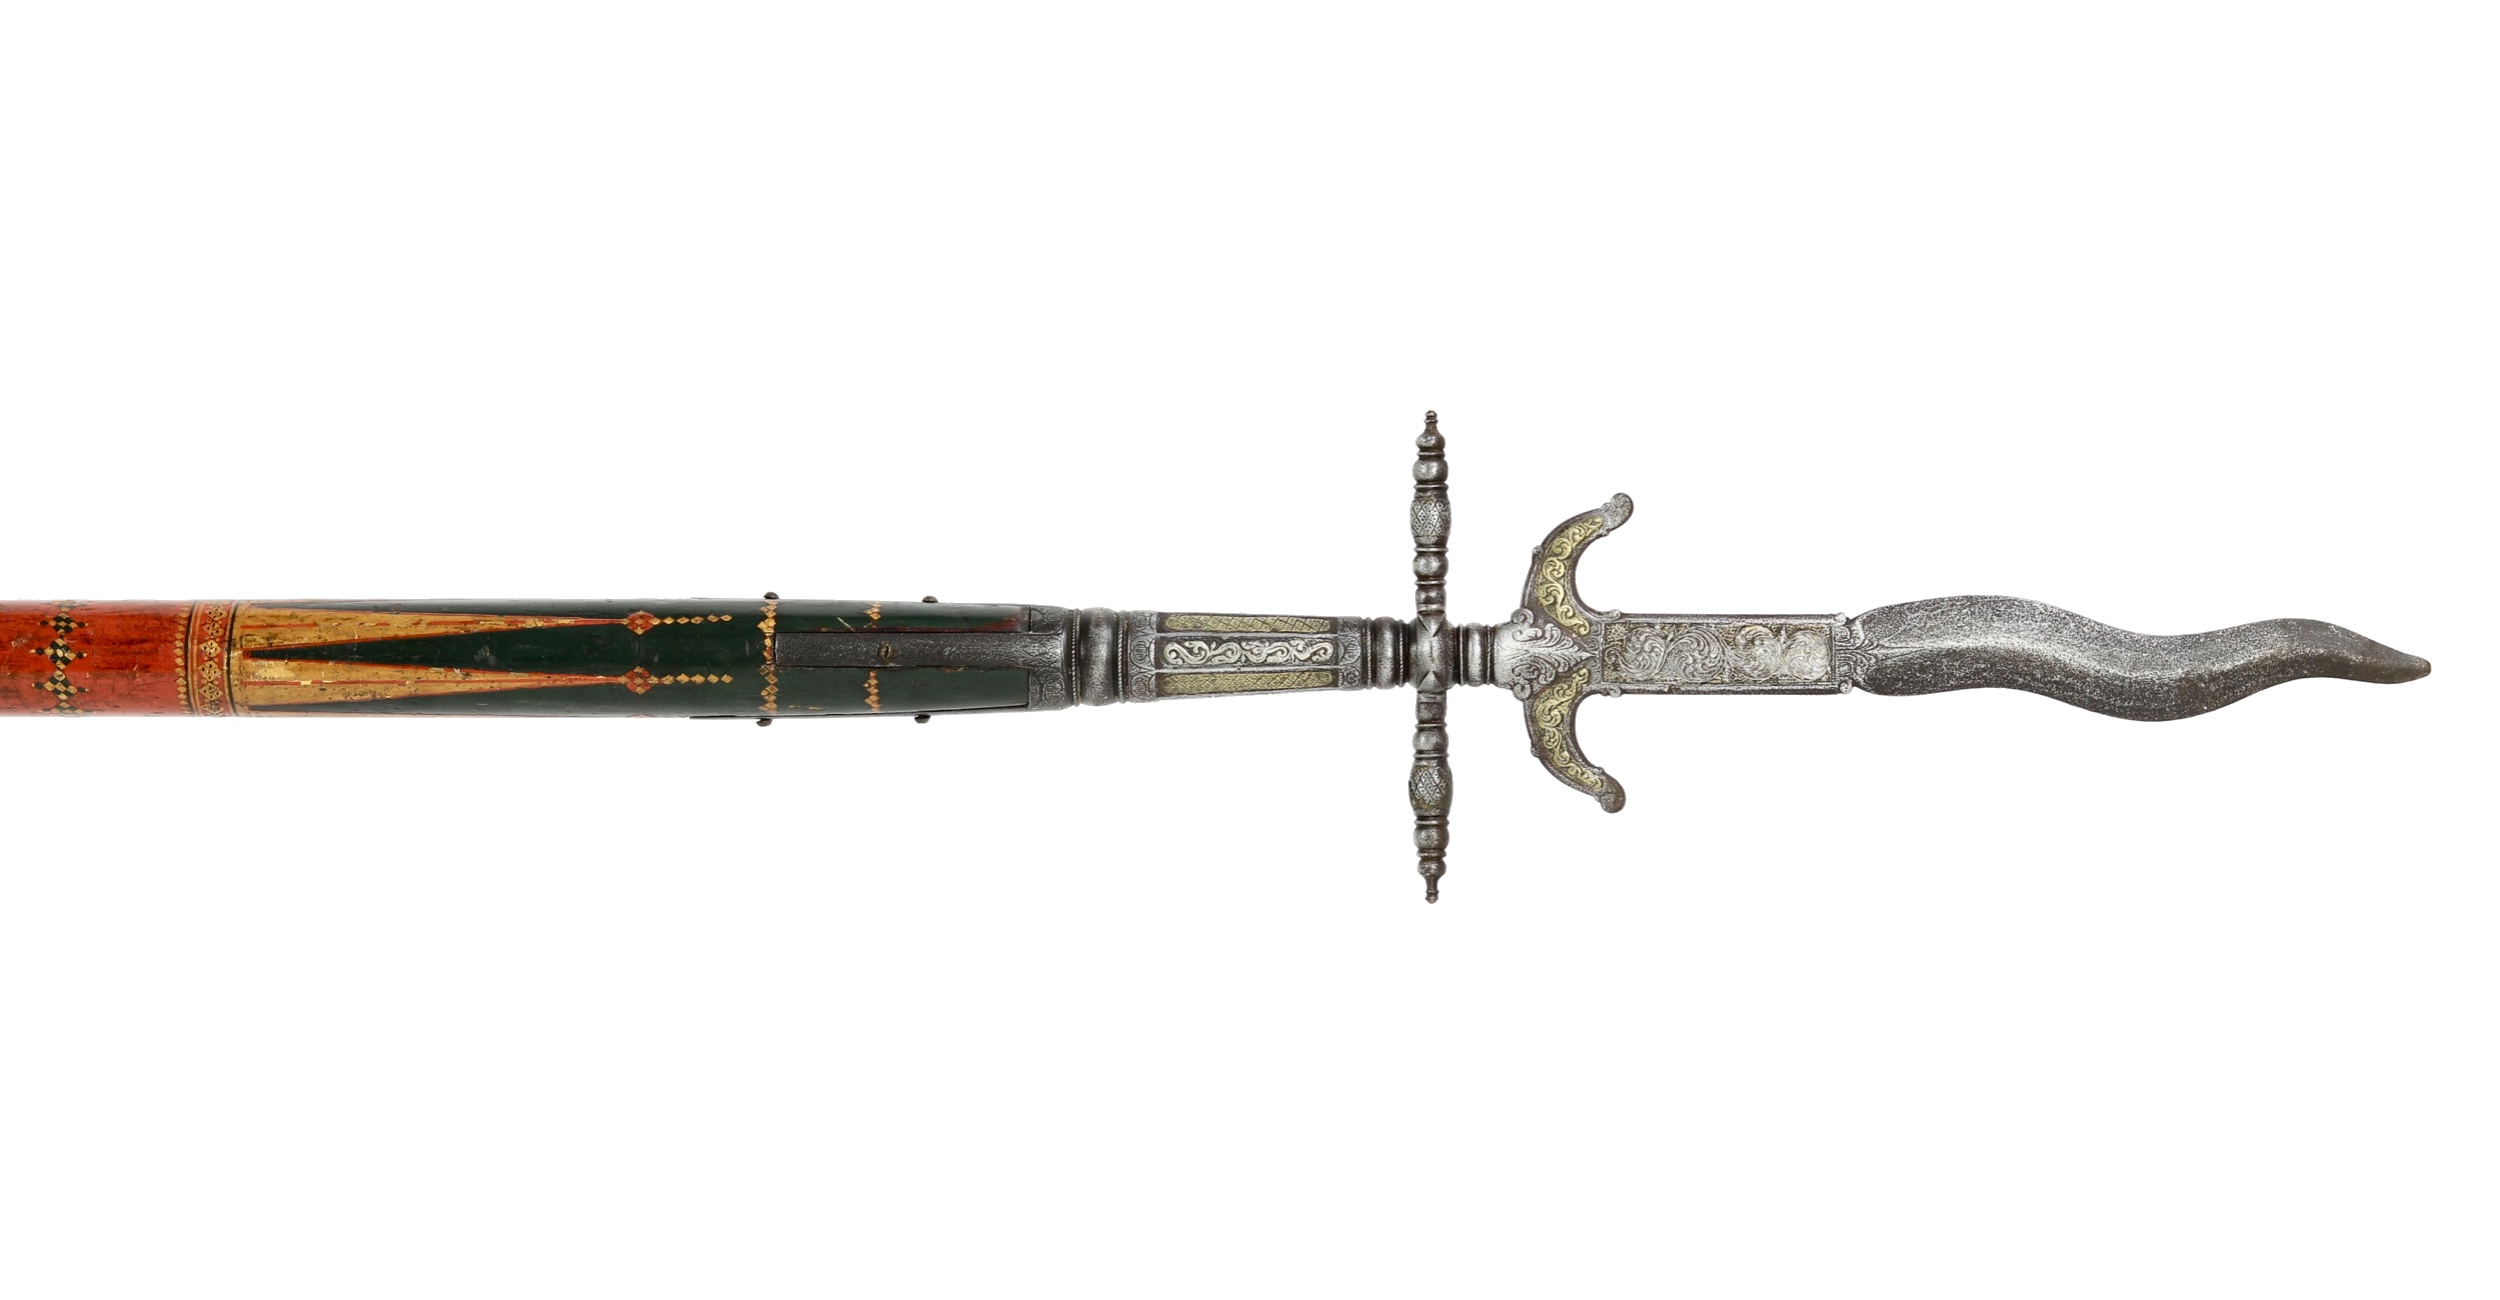 Sinhalese cross spear